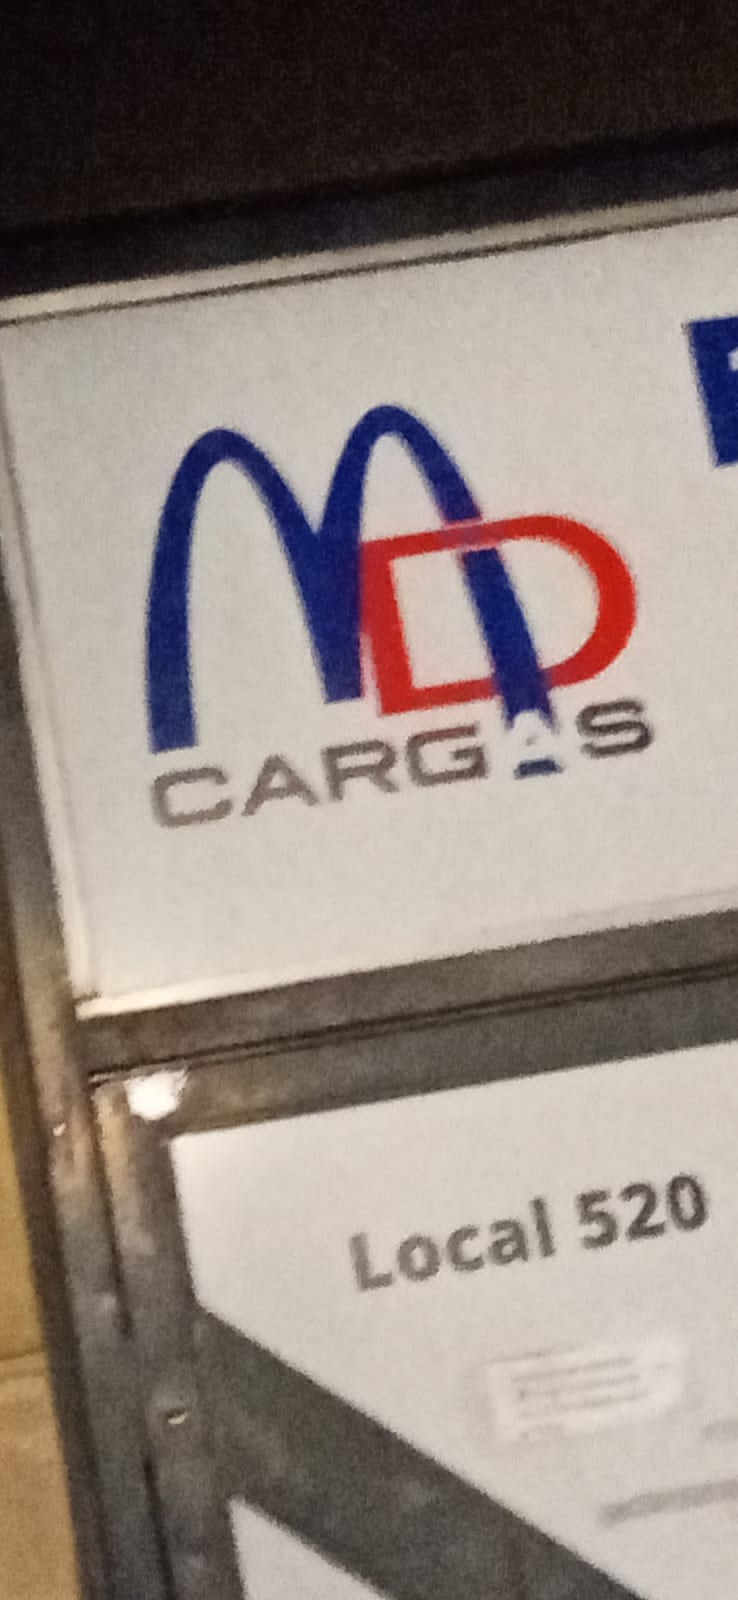 When robas el logo de Macdonalds - meme